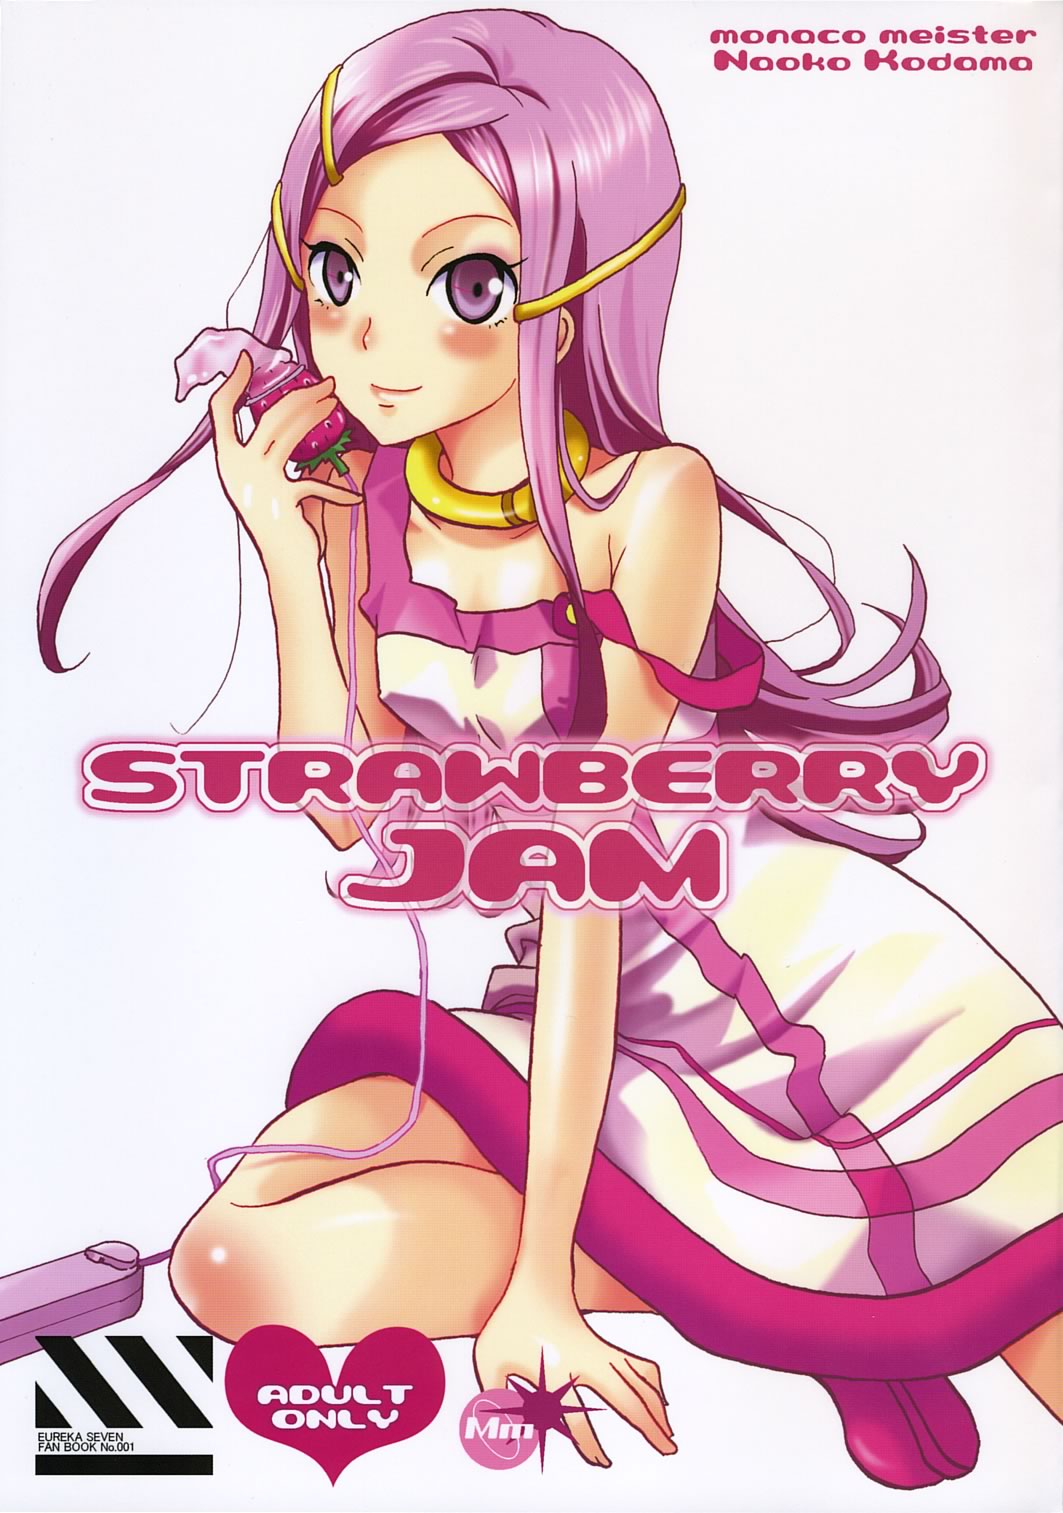 [Monaco Meister Kodama Naoko)] strawberry jam (Koukyoushihen Eureka seveN) page 1 full